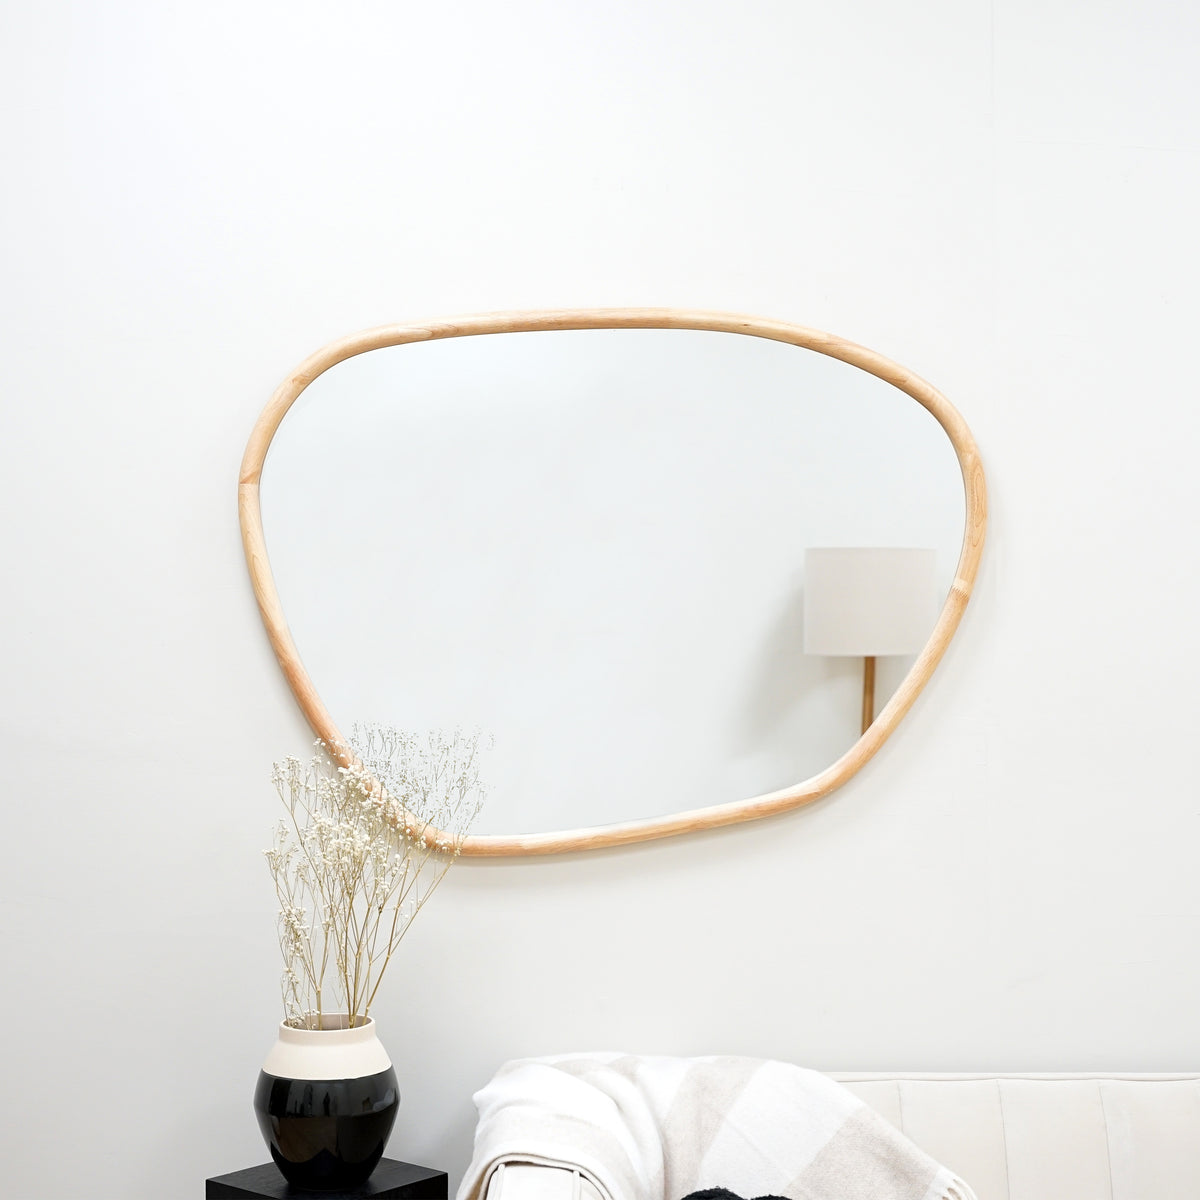 Organic irregular natural-coloured wooden wall mirror displayed horizontally